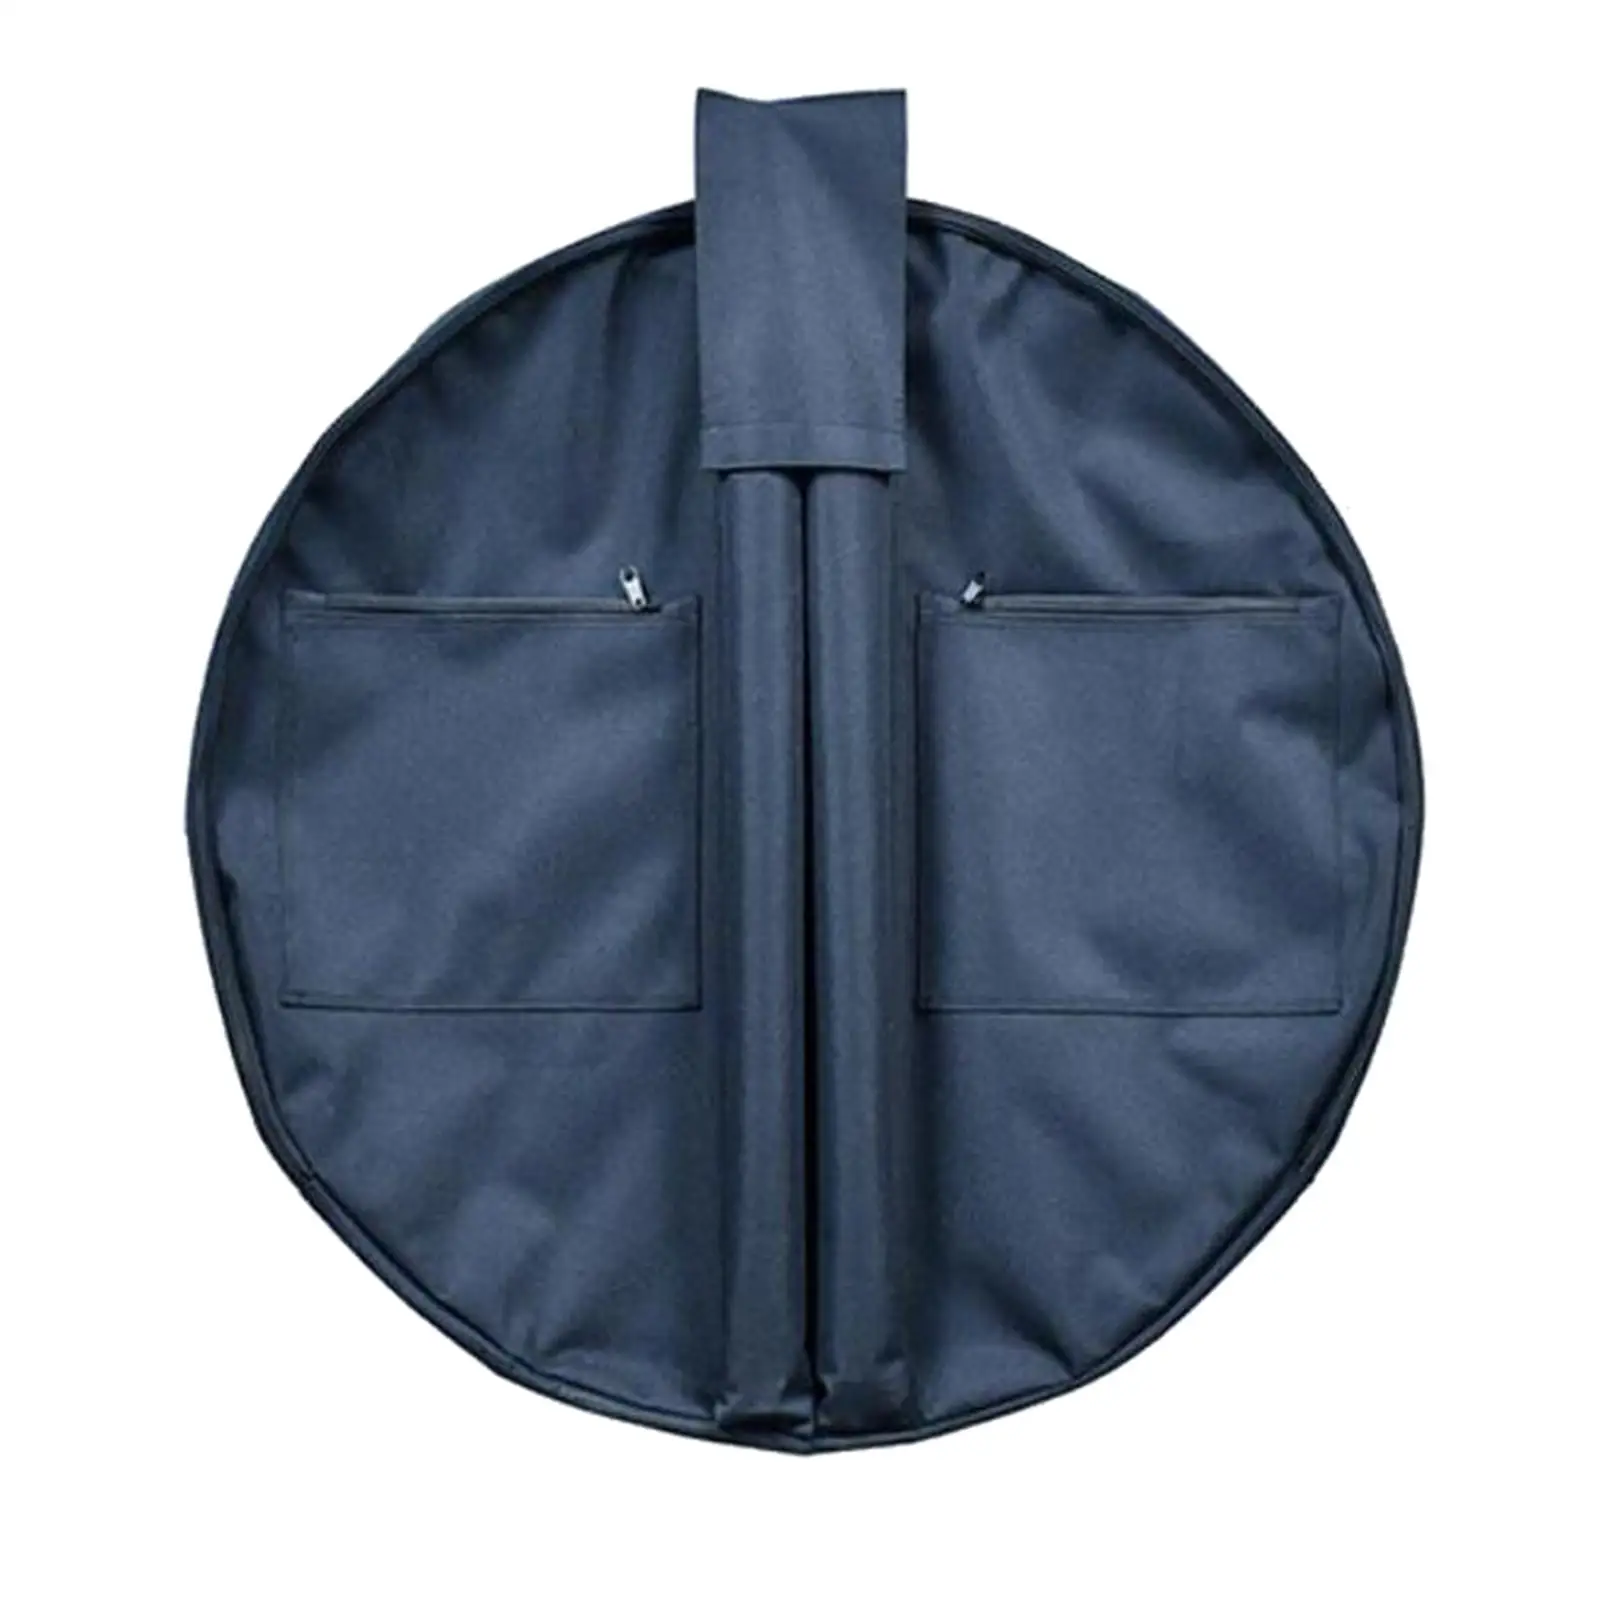 Portable Golf Disc Practice Basket Bag Golf Accessories Storage Organizer Weather Resistant Large Capacity Transit Bag